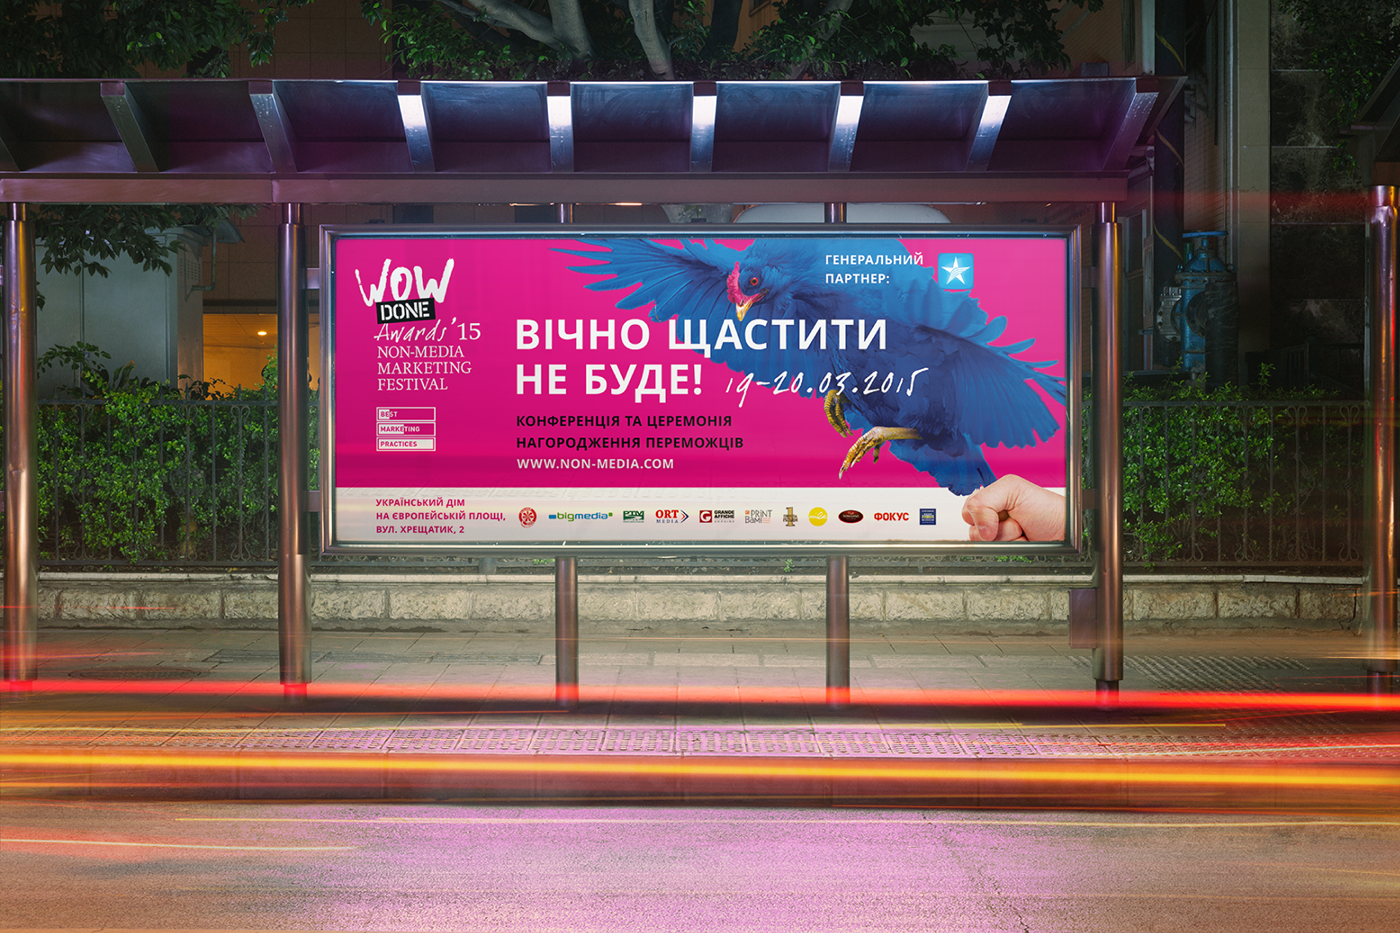 wow done Awards non-media marketing   festival ukraine